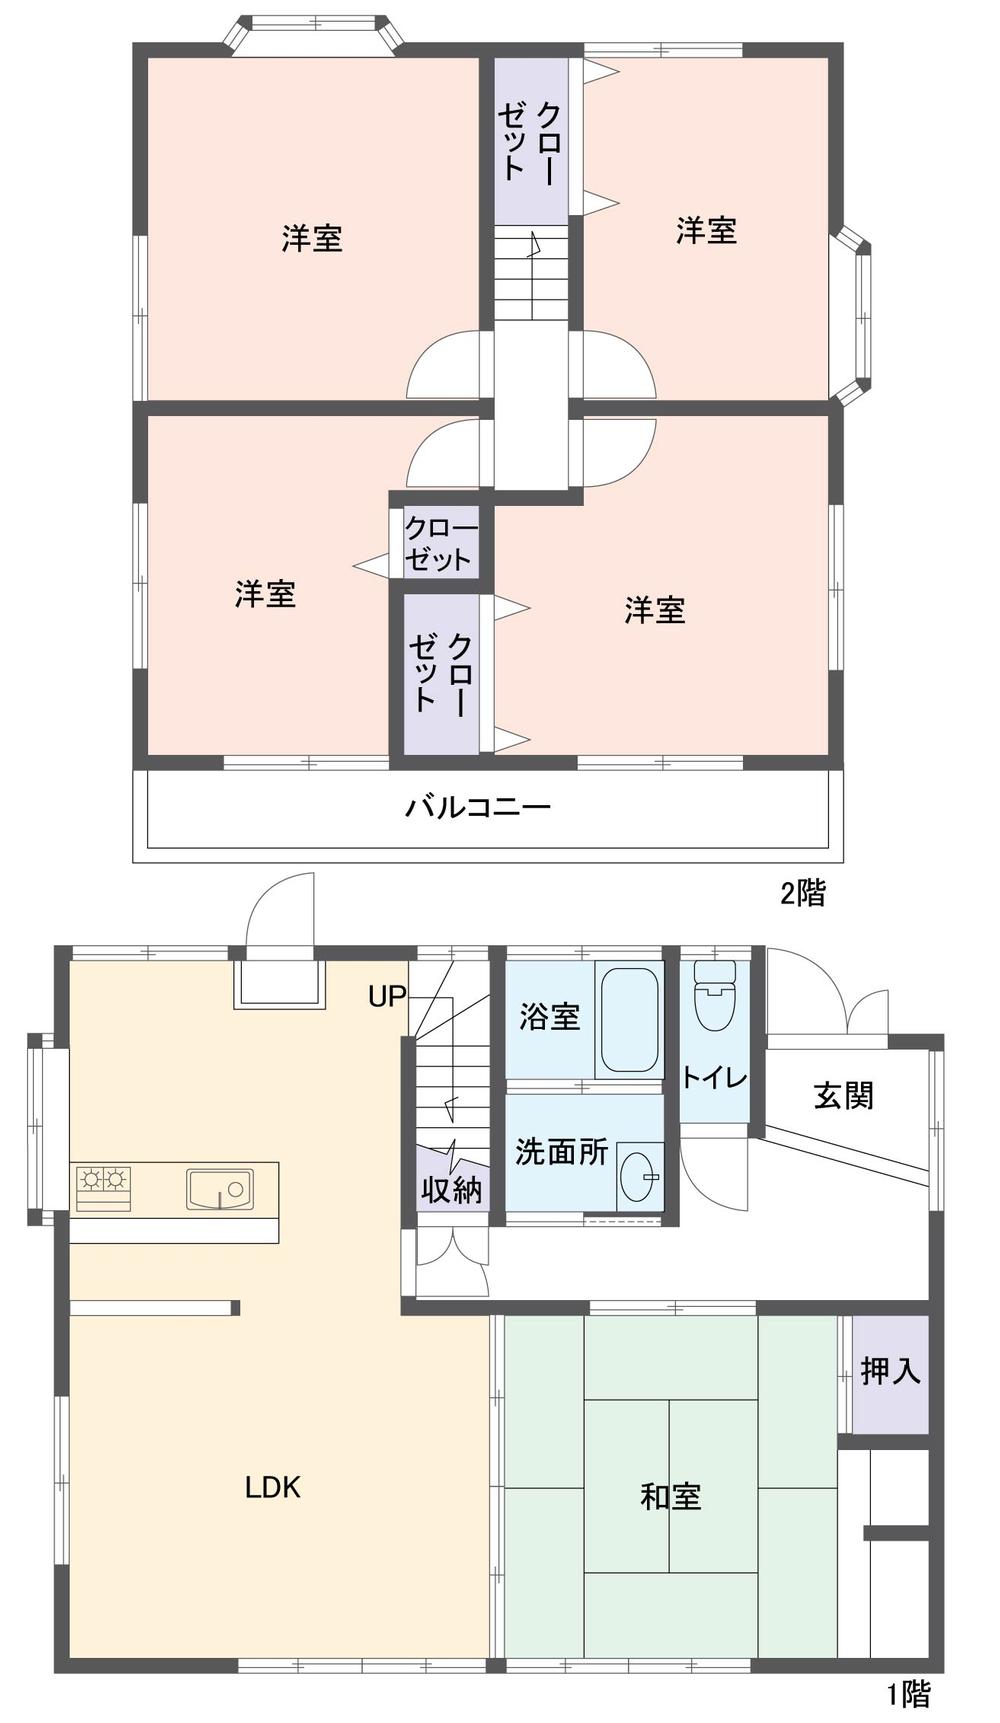 Floor plan. 21,800,000 yen, 5LDK, Land area 187.7 sq m , Building area 138.18 sq m